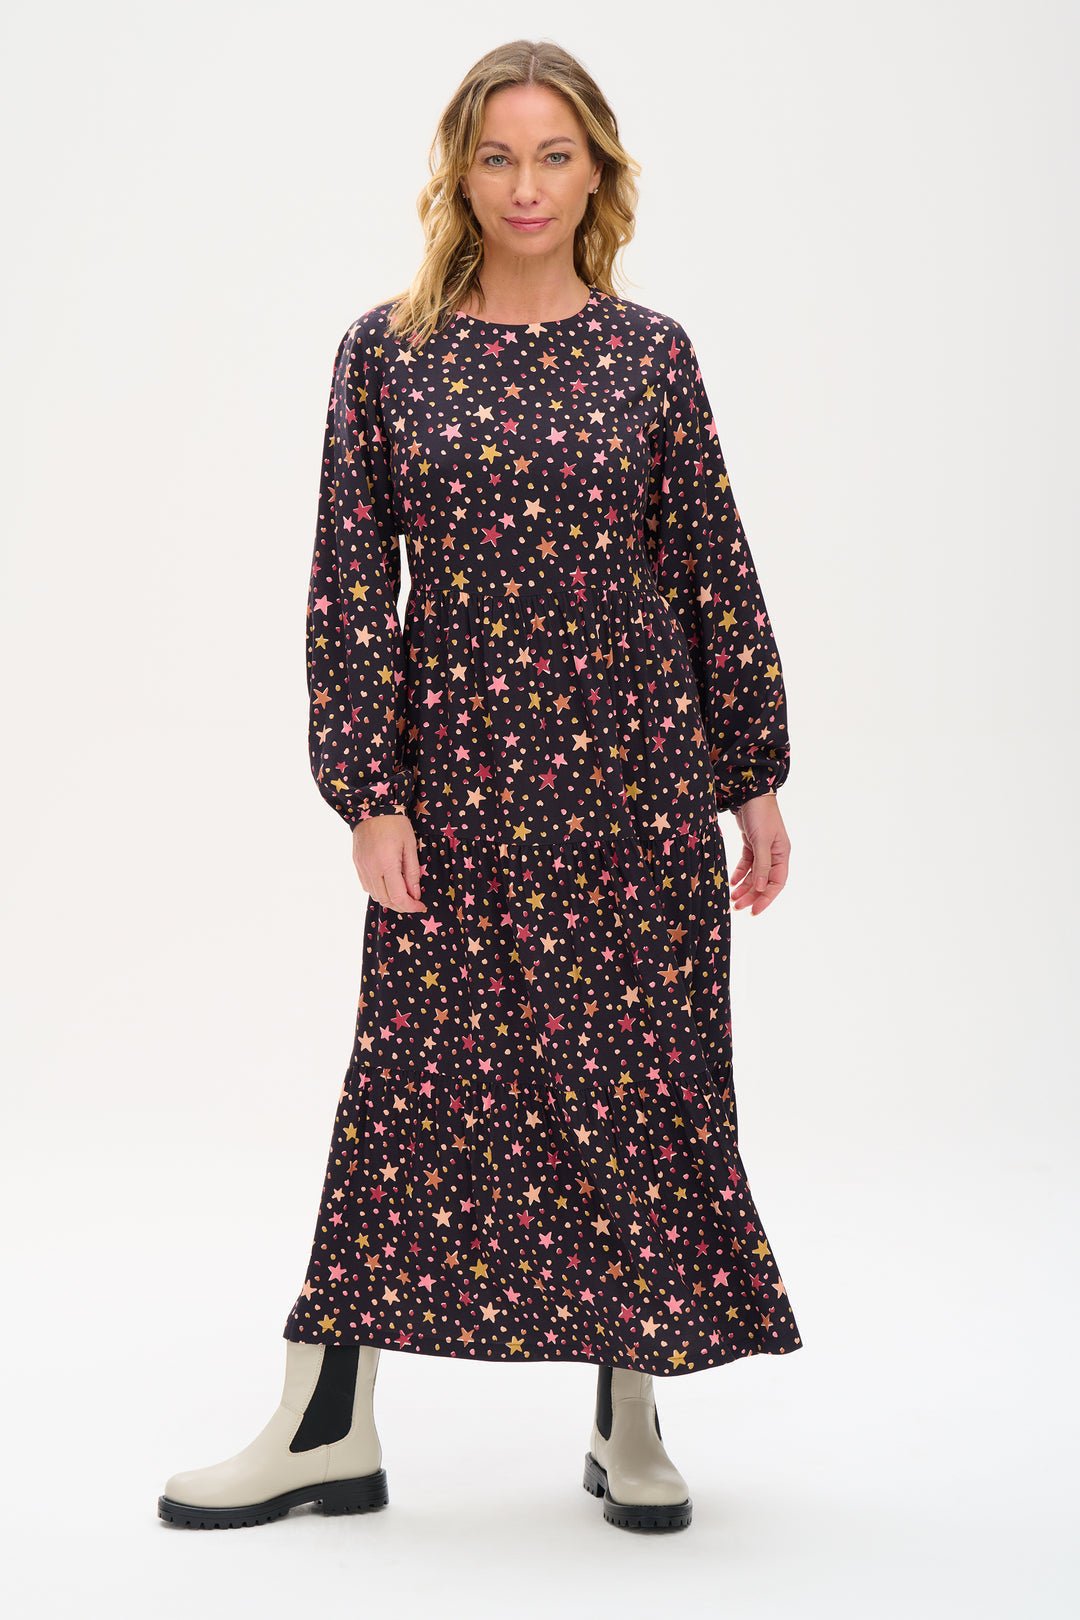 Shania Maxi tiered Dress - Cutout stars - Rockamilly-Dresses-Vintage